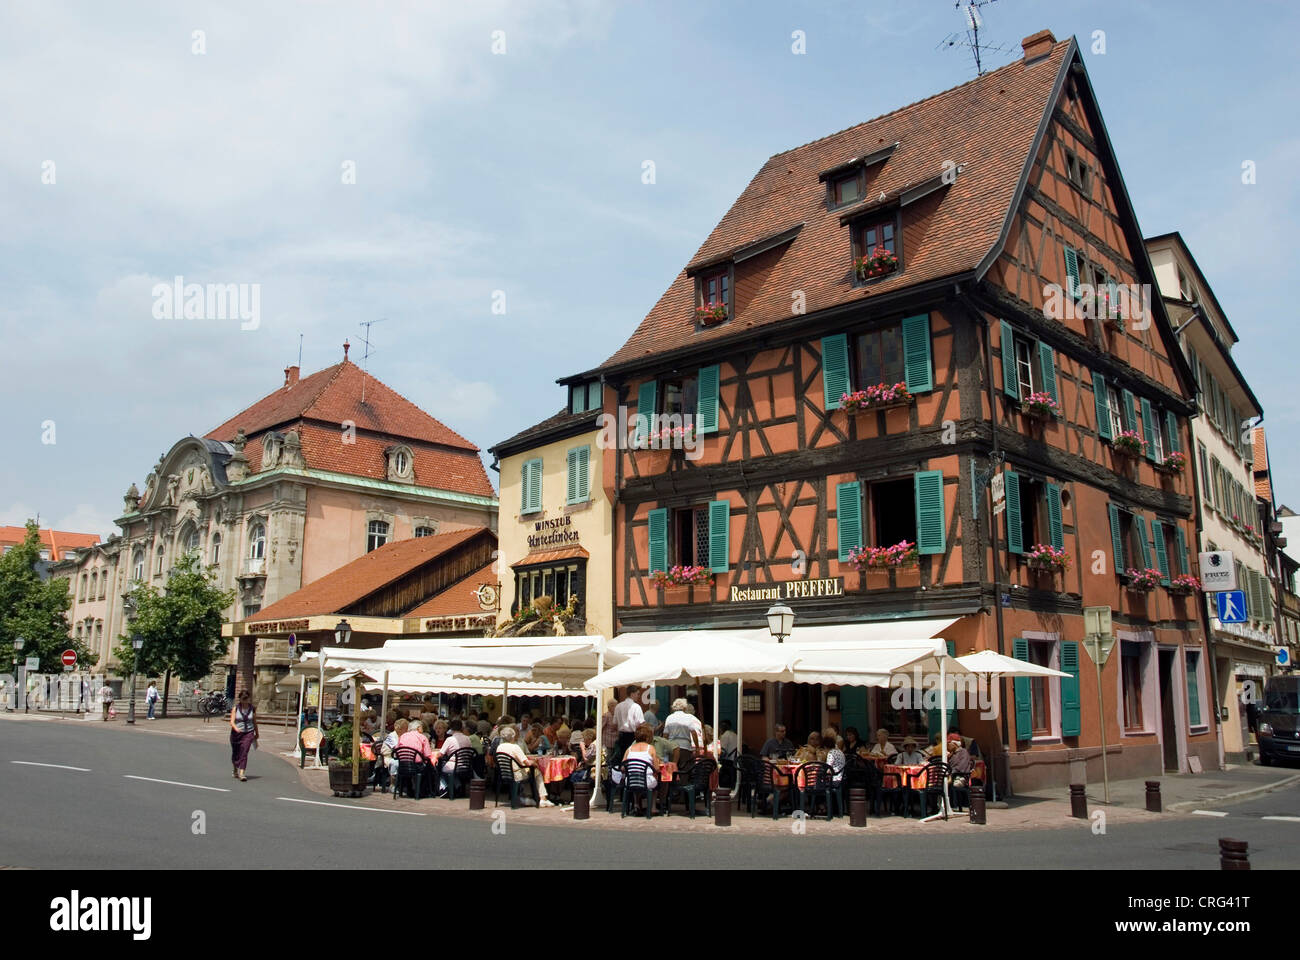 restaurant Pfeffel, half-timbered house, France, Alsace, Colmar Stock Photo